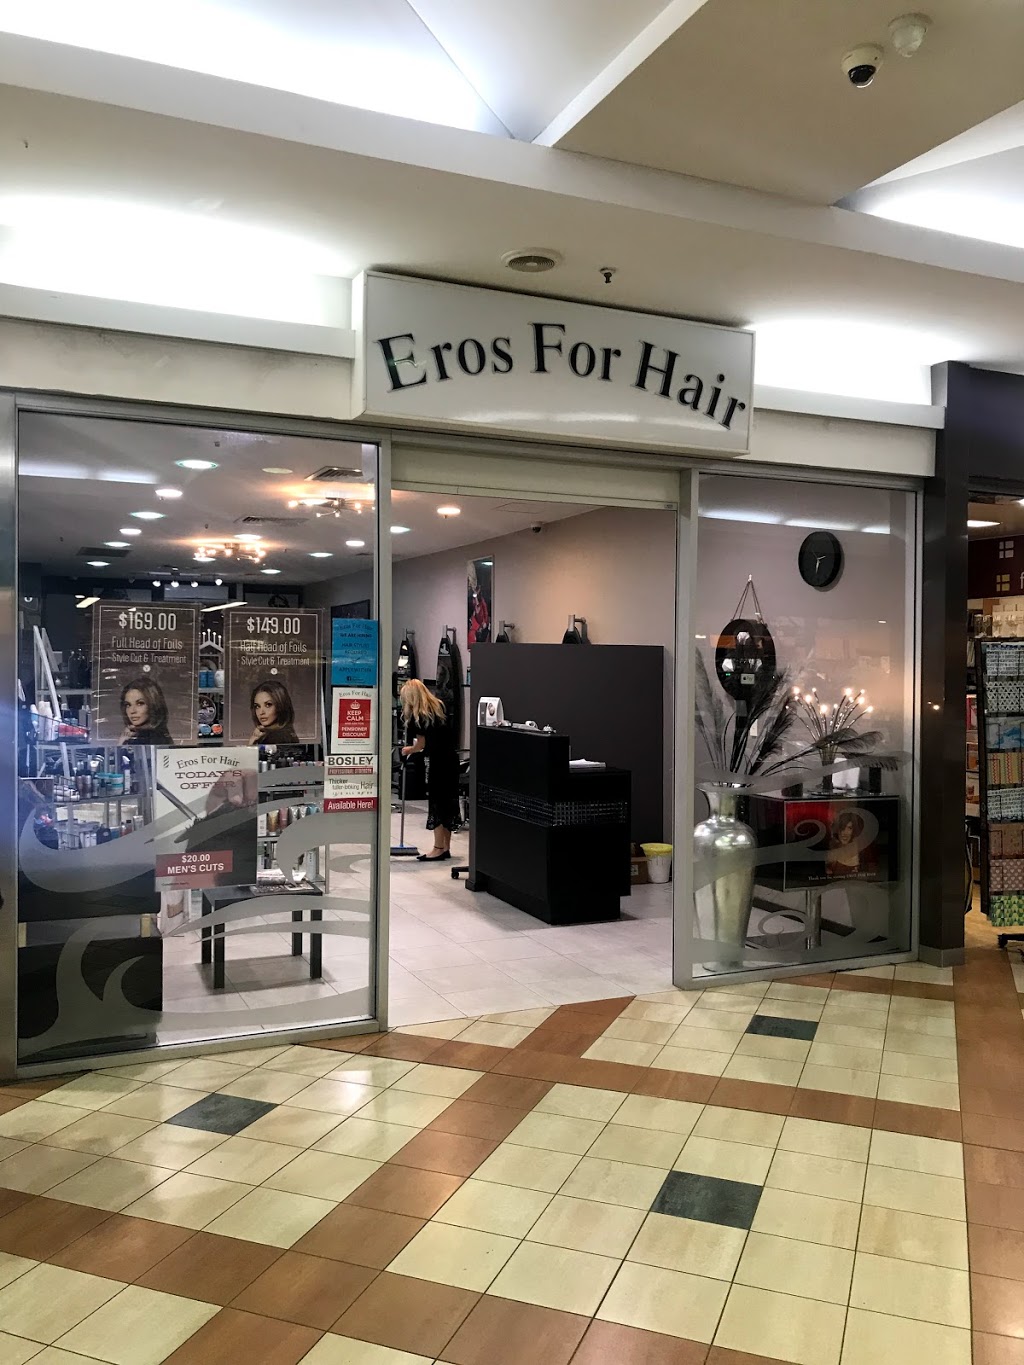 Eros For Hair Midland | Centrepoint Shopping Centre, 307 Great Eastern Hwy, Midland WA 6056, Australia | Phone: (08) 9274 3041